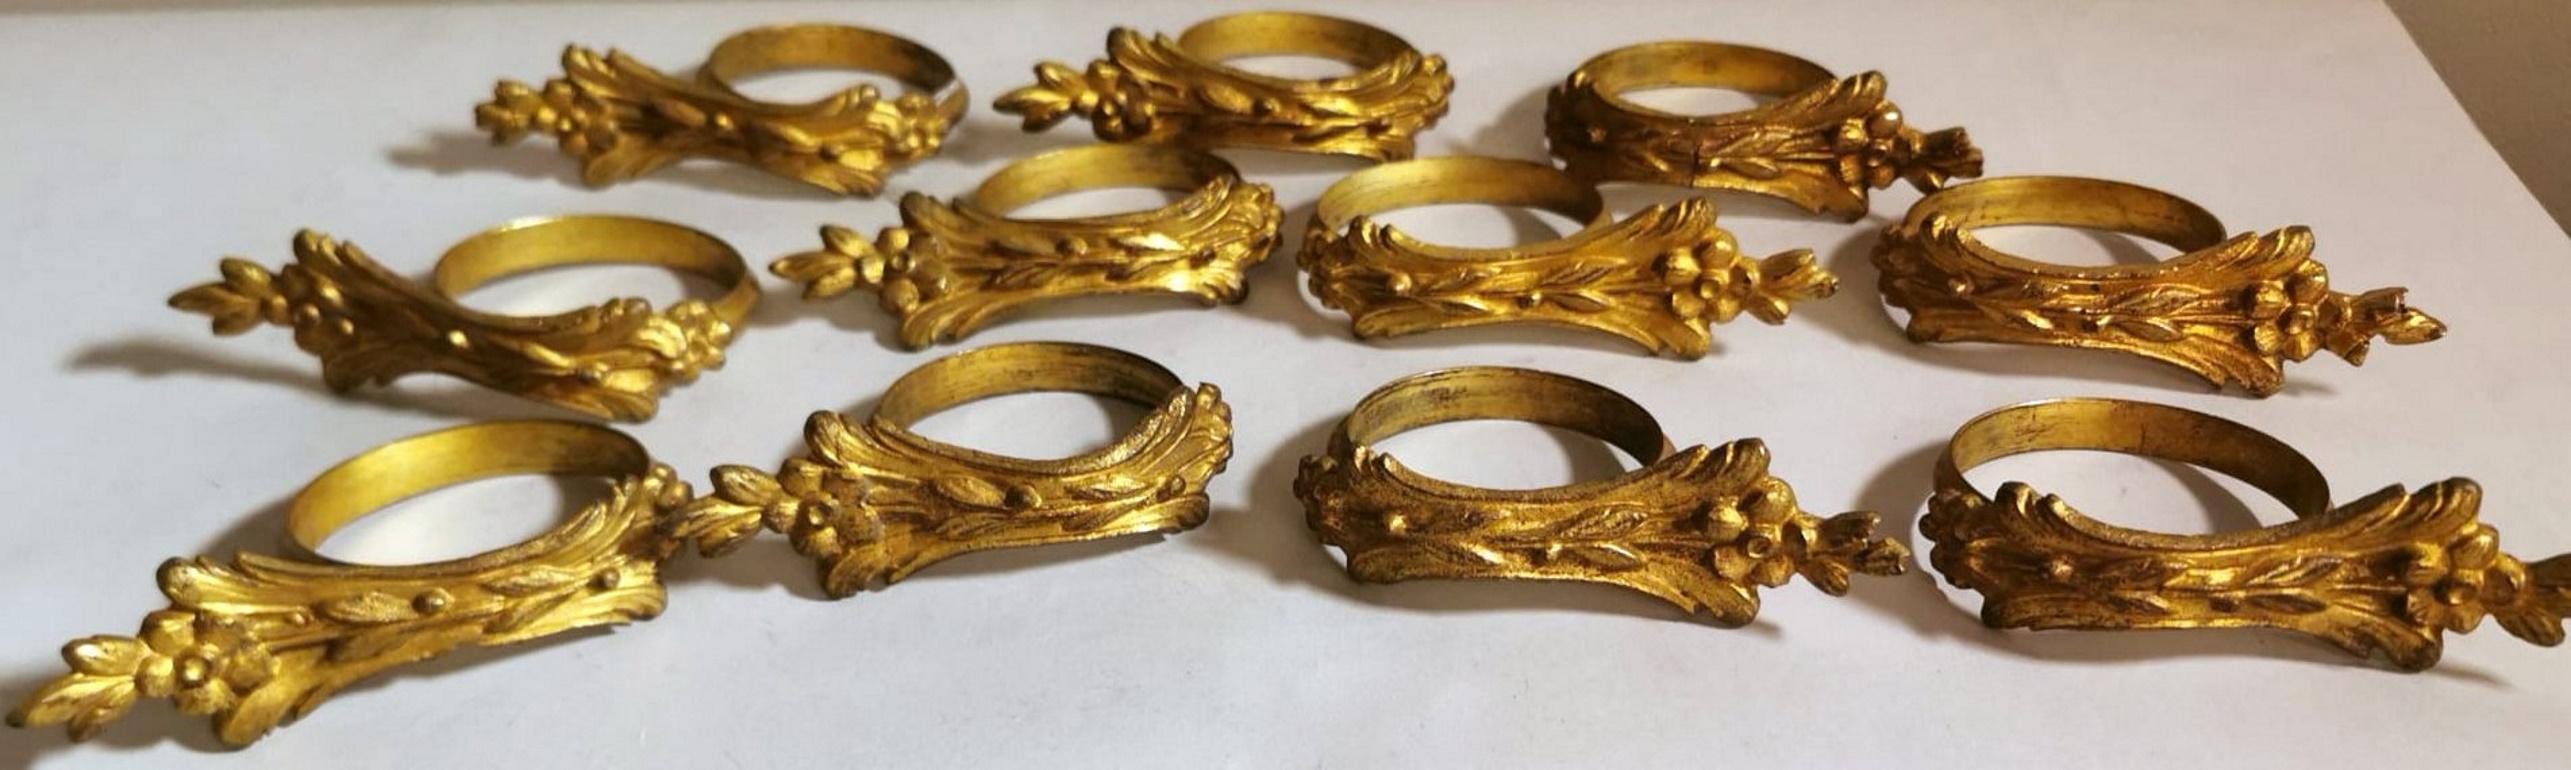 bronze curtain rings